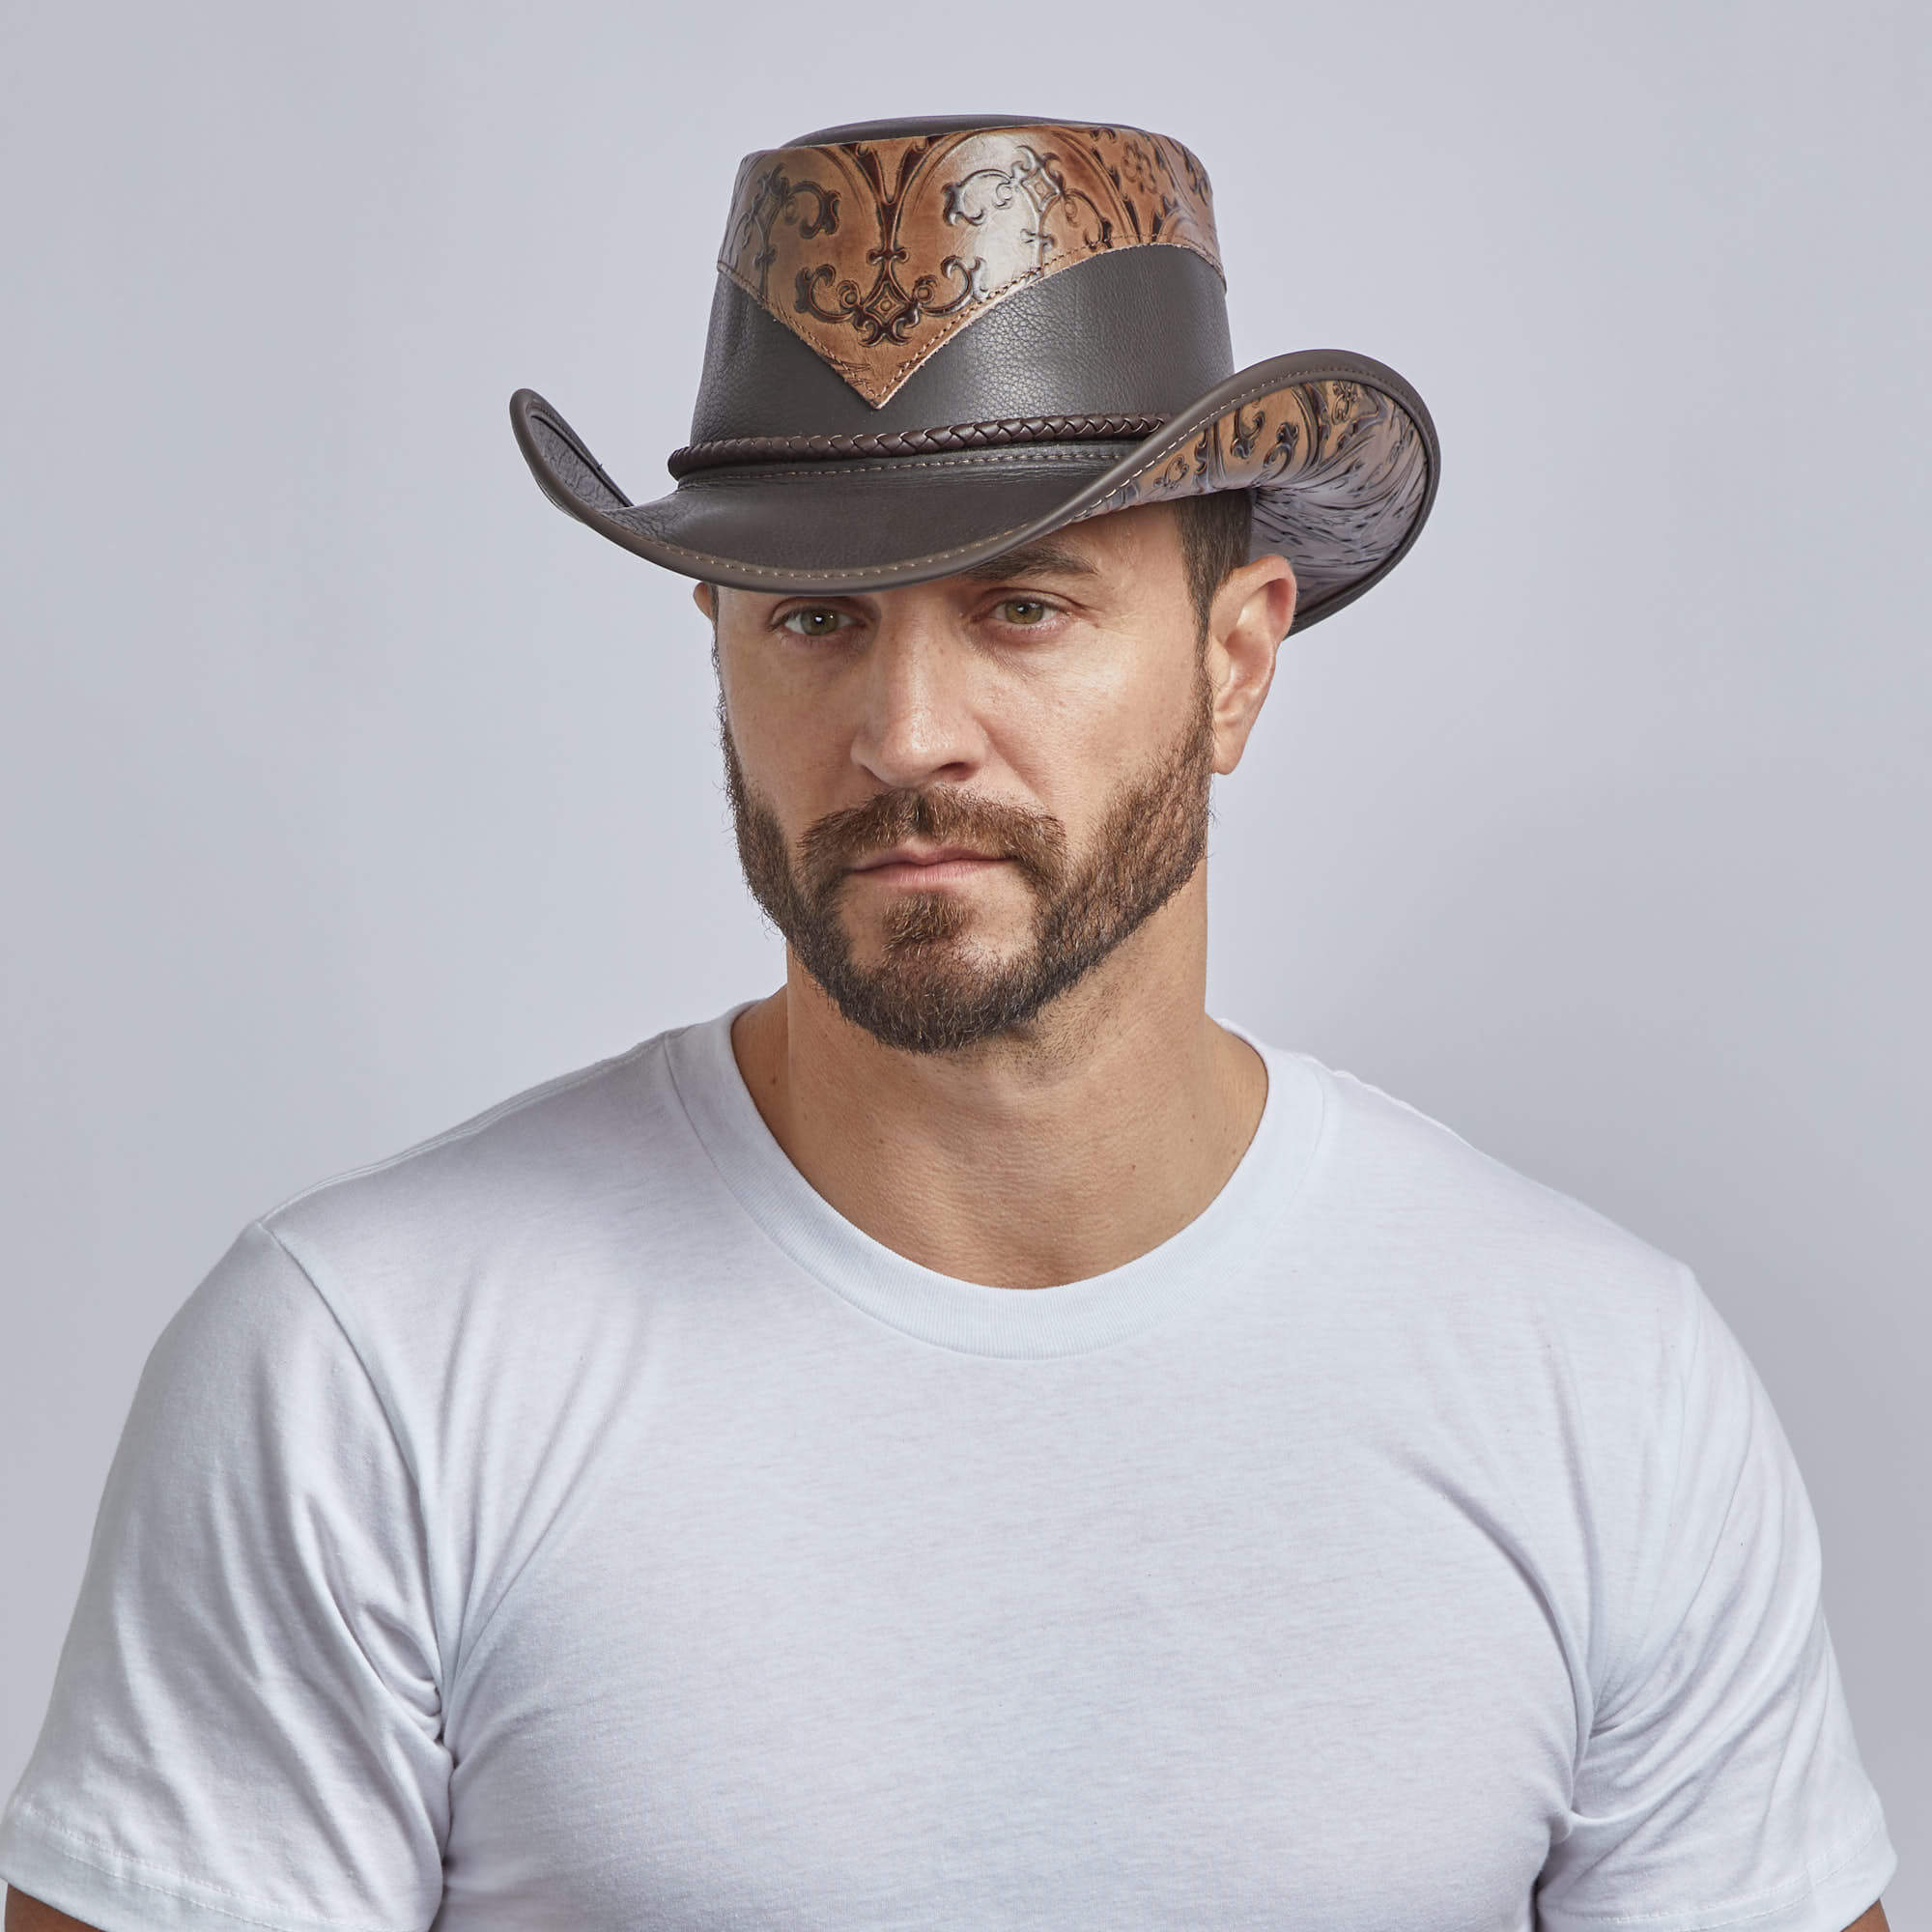 Falcon - Mens American Leather Cowboy Hat